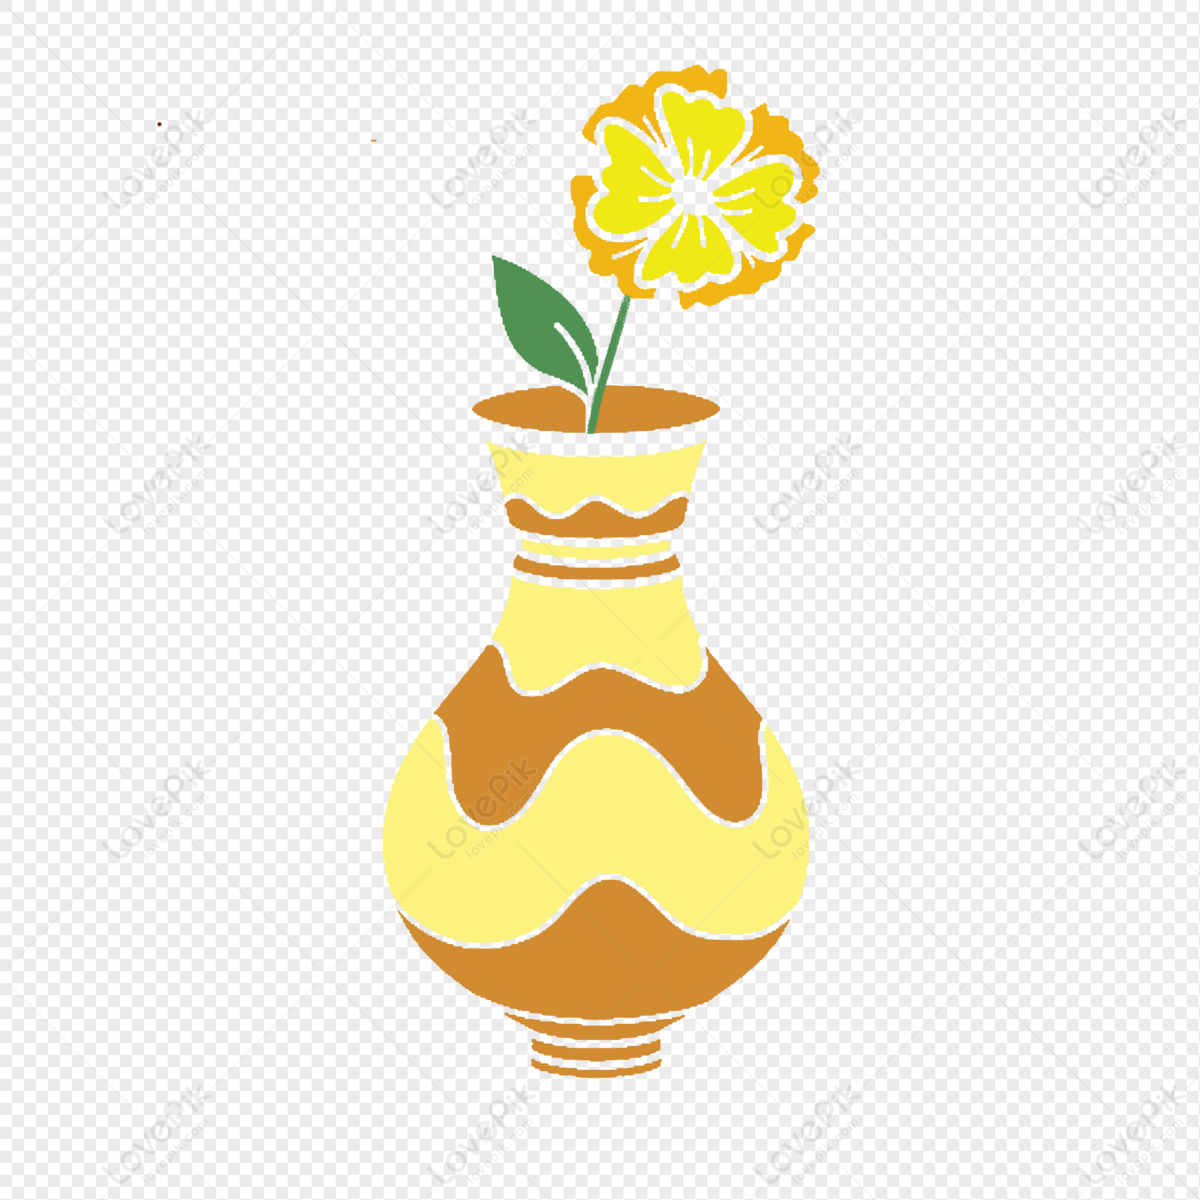 Cartoon Creative Vase Illustration PNG Transparent Image And Clipart Image  For Free Download - Lovepik | 401531747